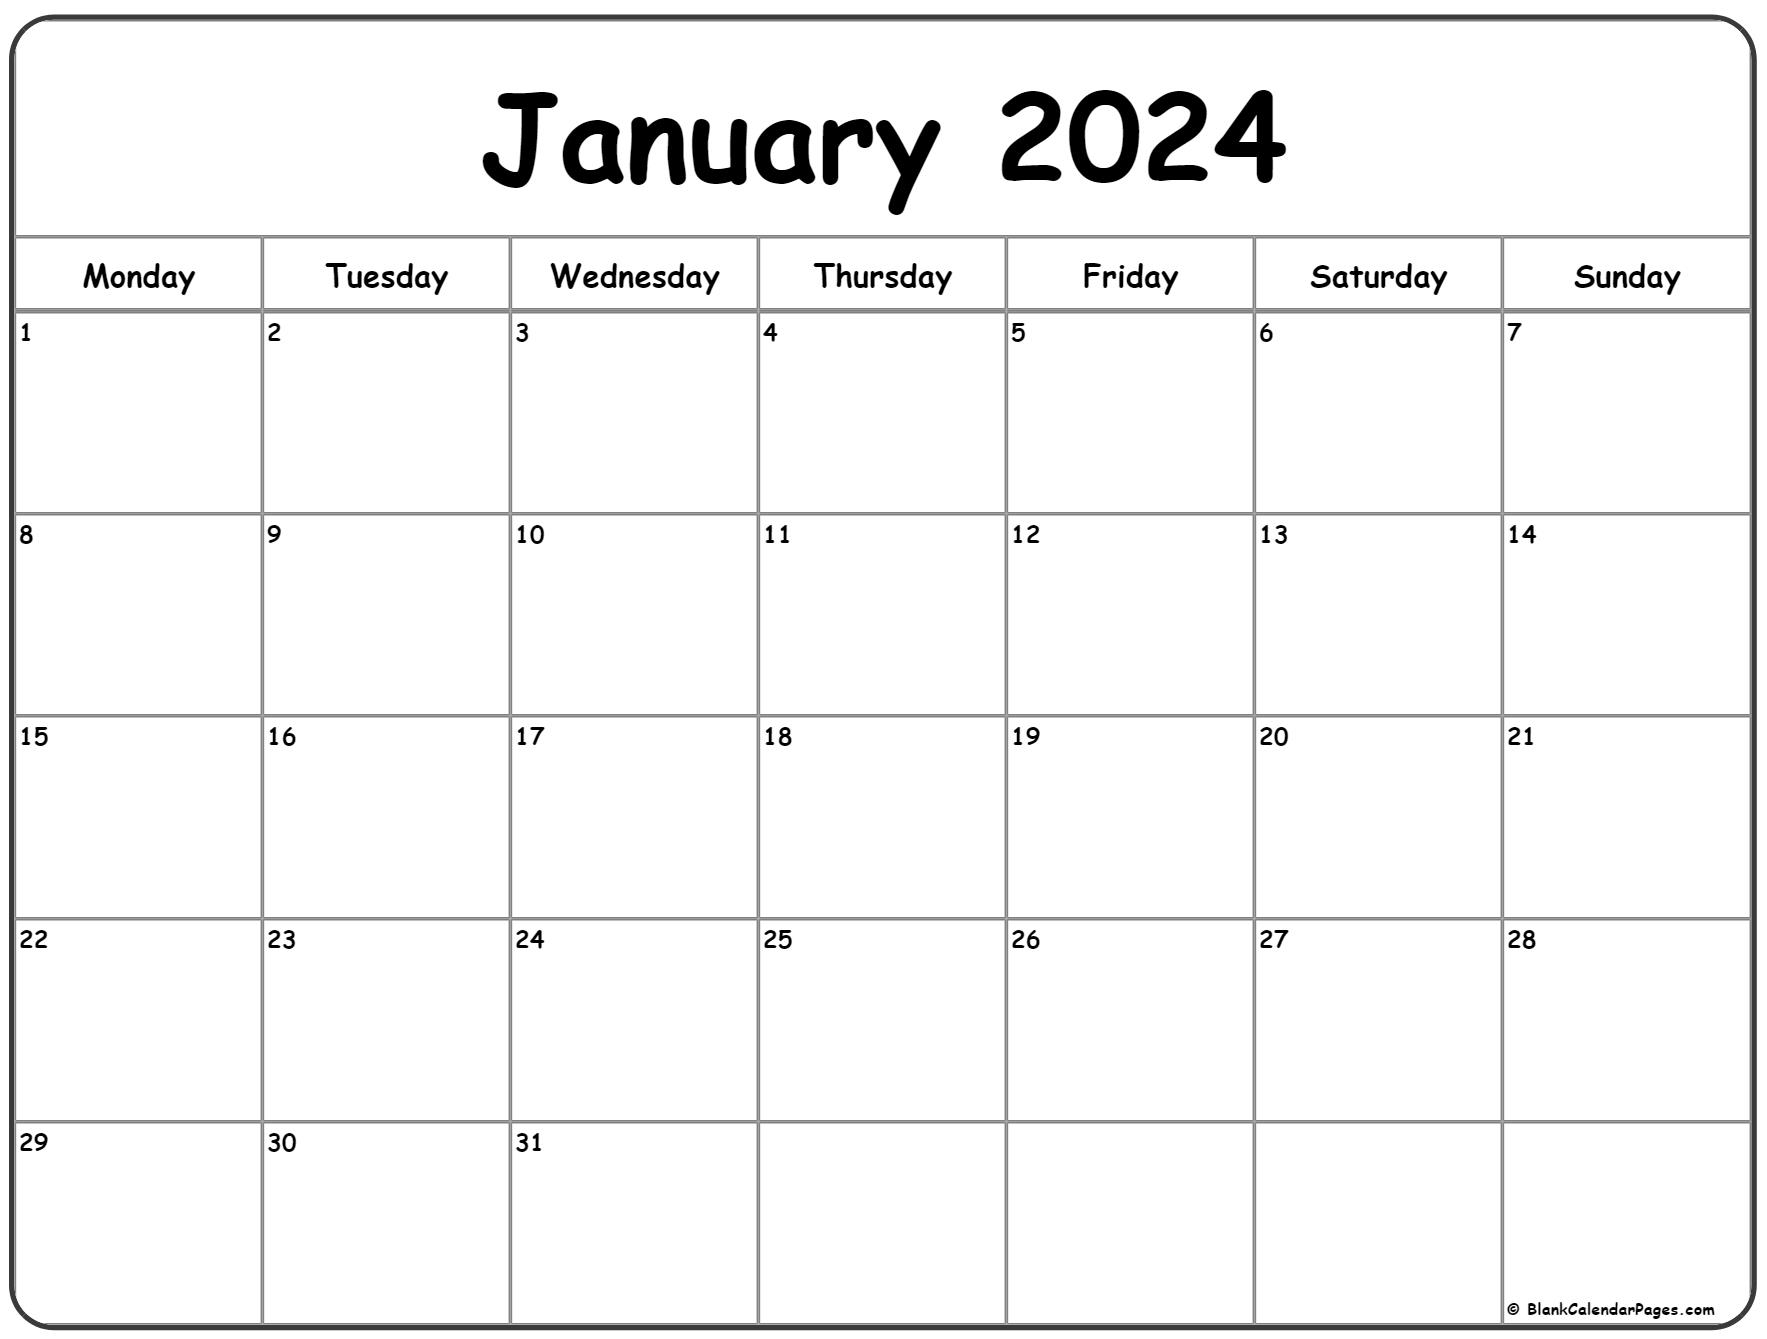 January 2024 Monday Calendar | Monday To Sunday for Free Printable Calendar 2024 Starting Monday